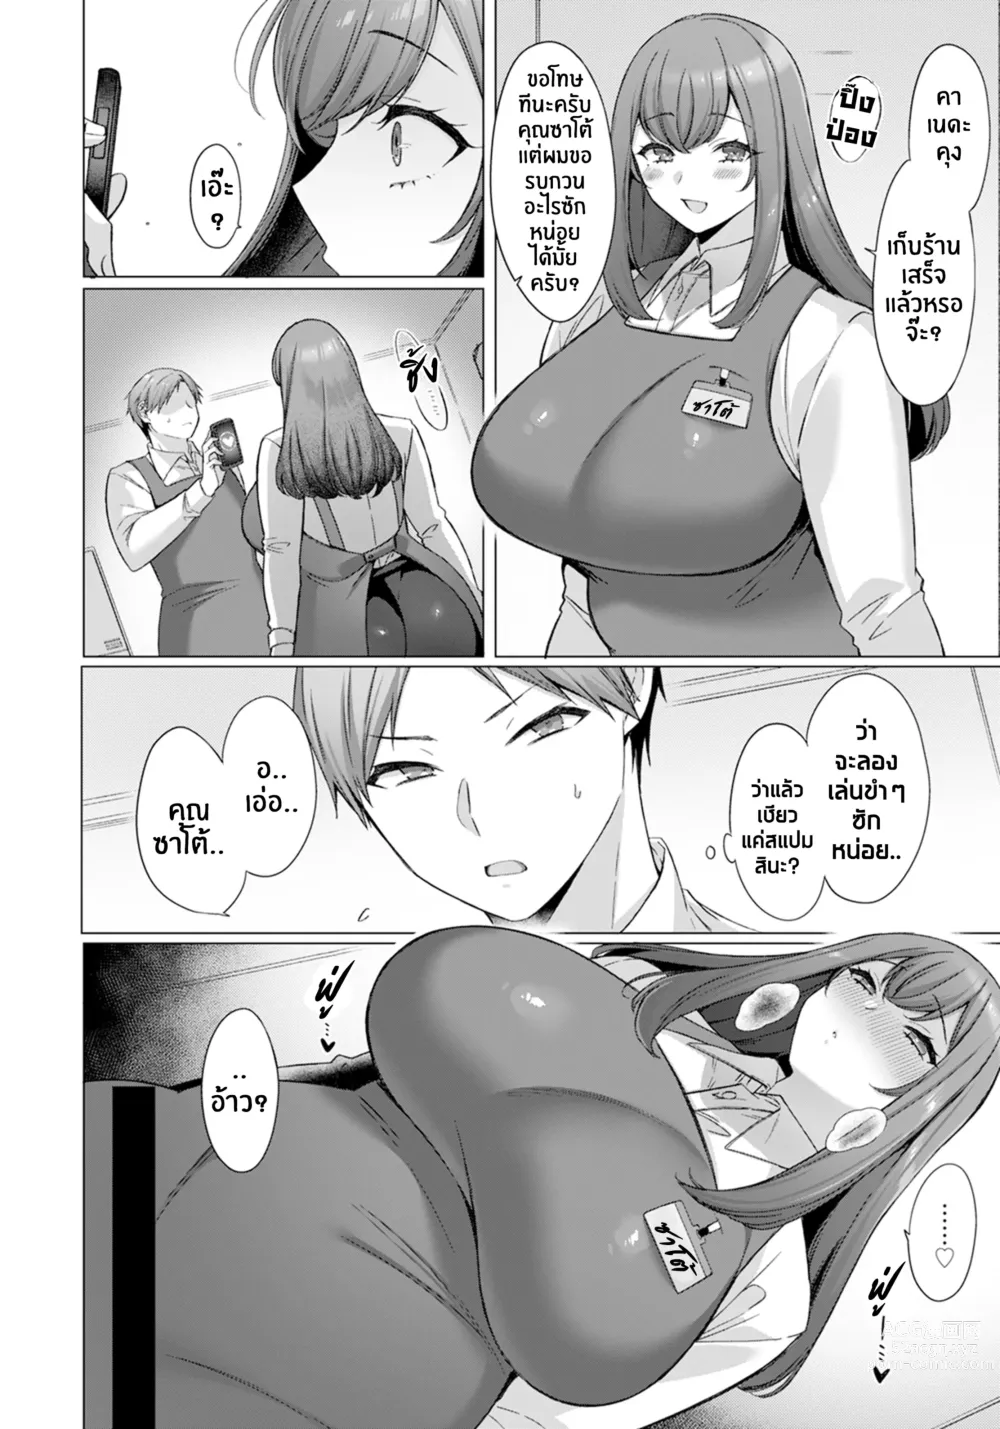 Page 3 of manga แอพจัดการความรู้สึกทางเพศ